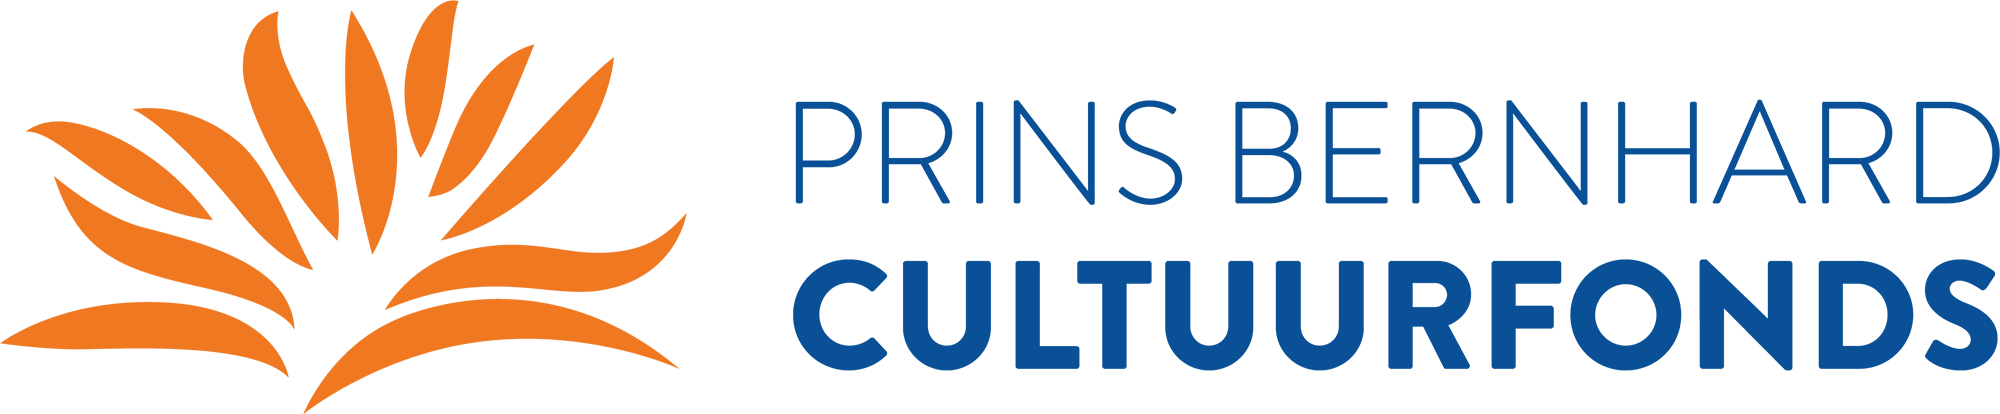 Pbcf Prins Bernard Cultuurfonds Logo